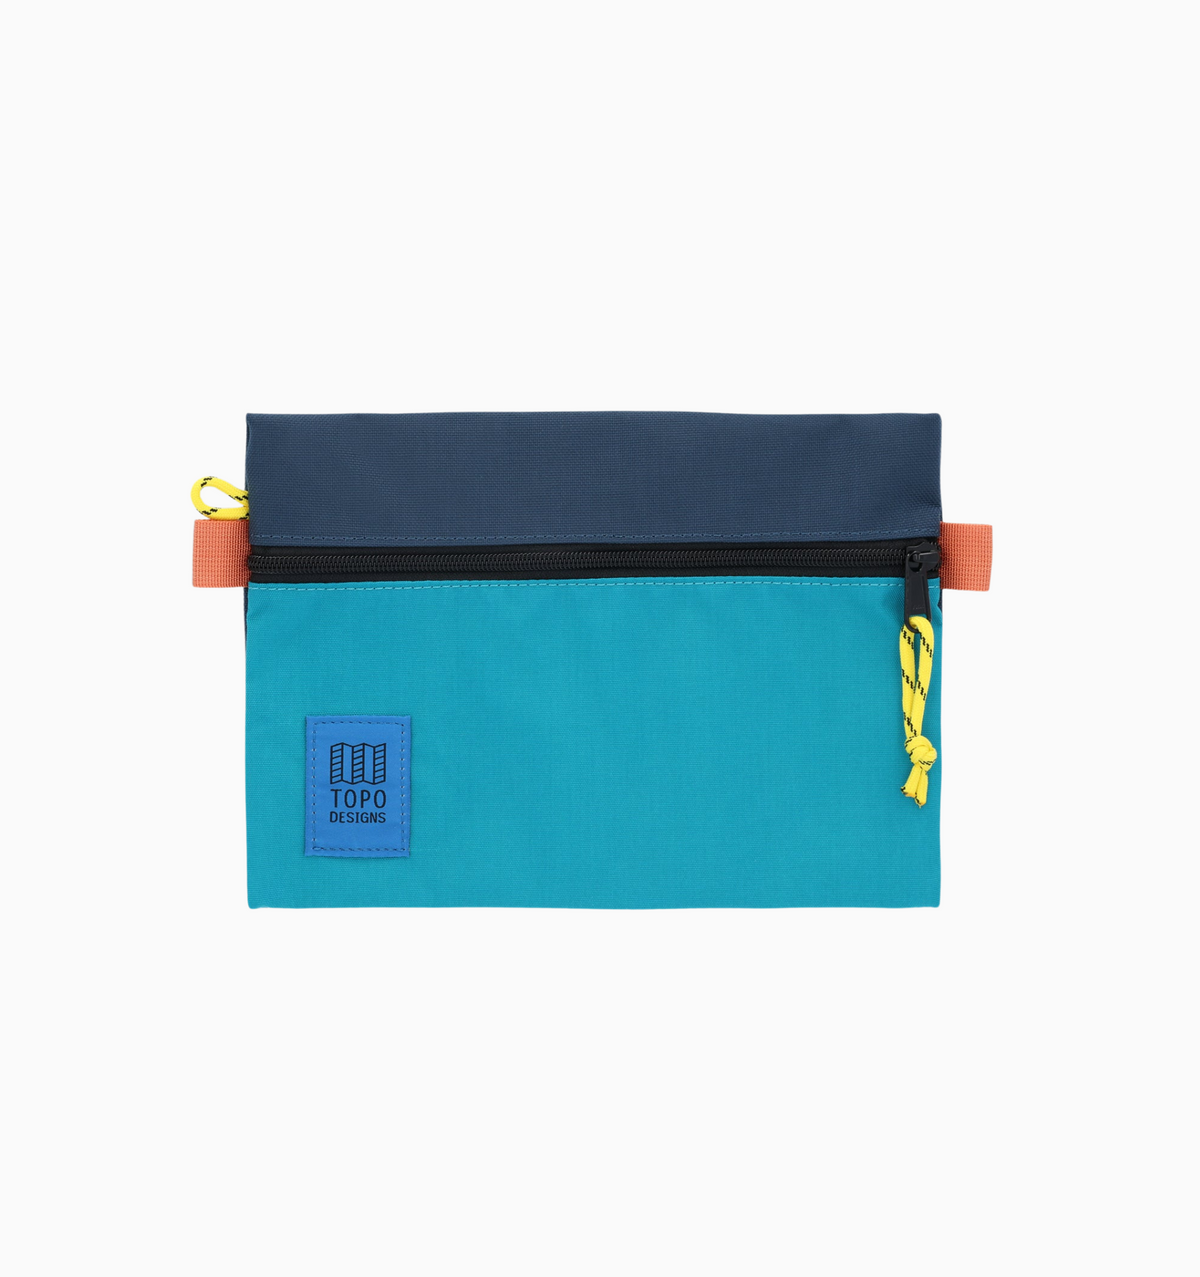 Topo Designs Medium Accessory Bag - Tile Blue Pond Blue